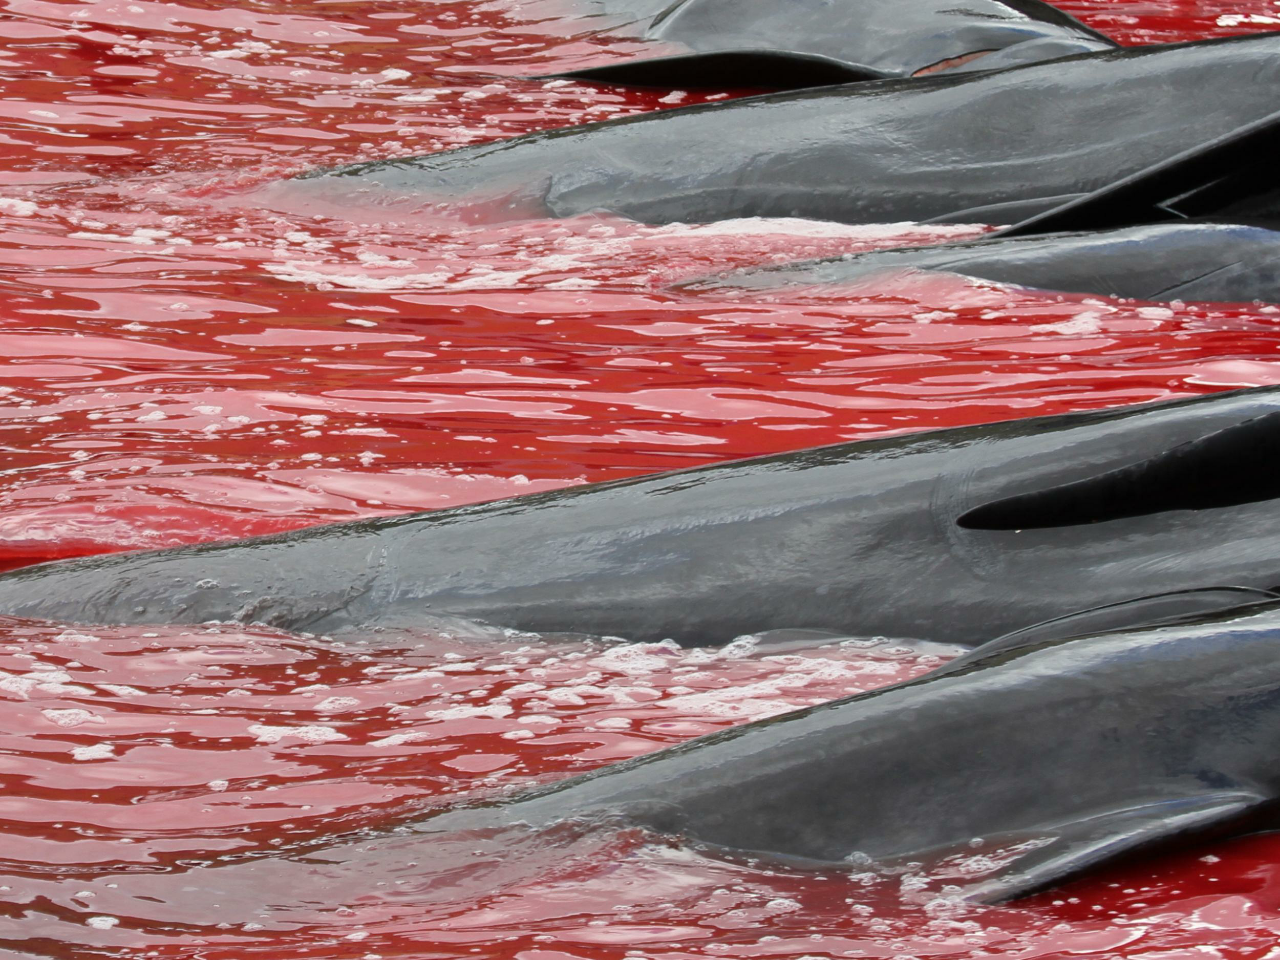 Jepang membantai 122 paus hamil untuk 'penelitian ilmiah'

